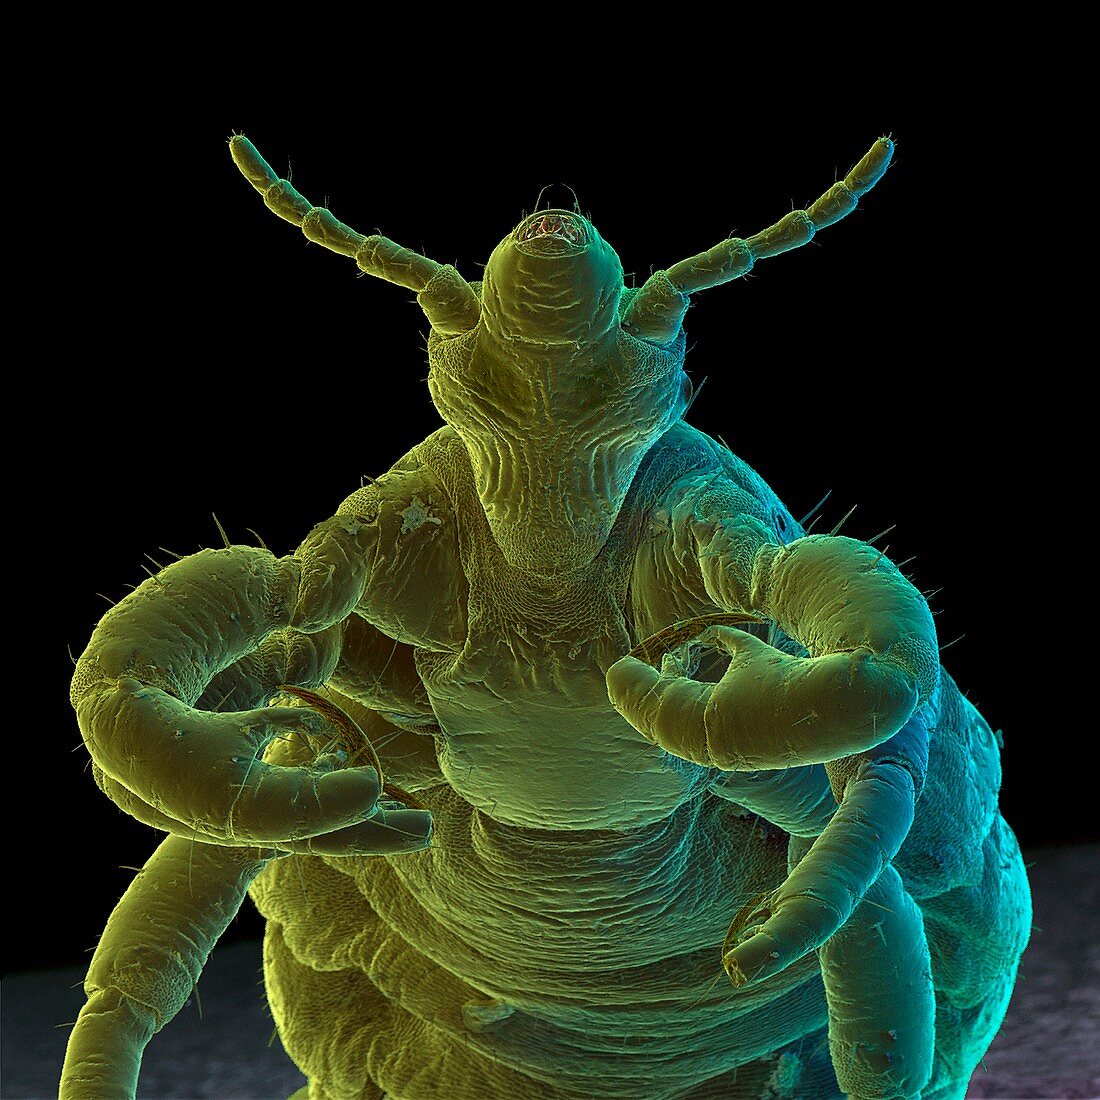 Coloured SEM of a human body louse,Pediculus